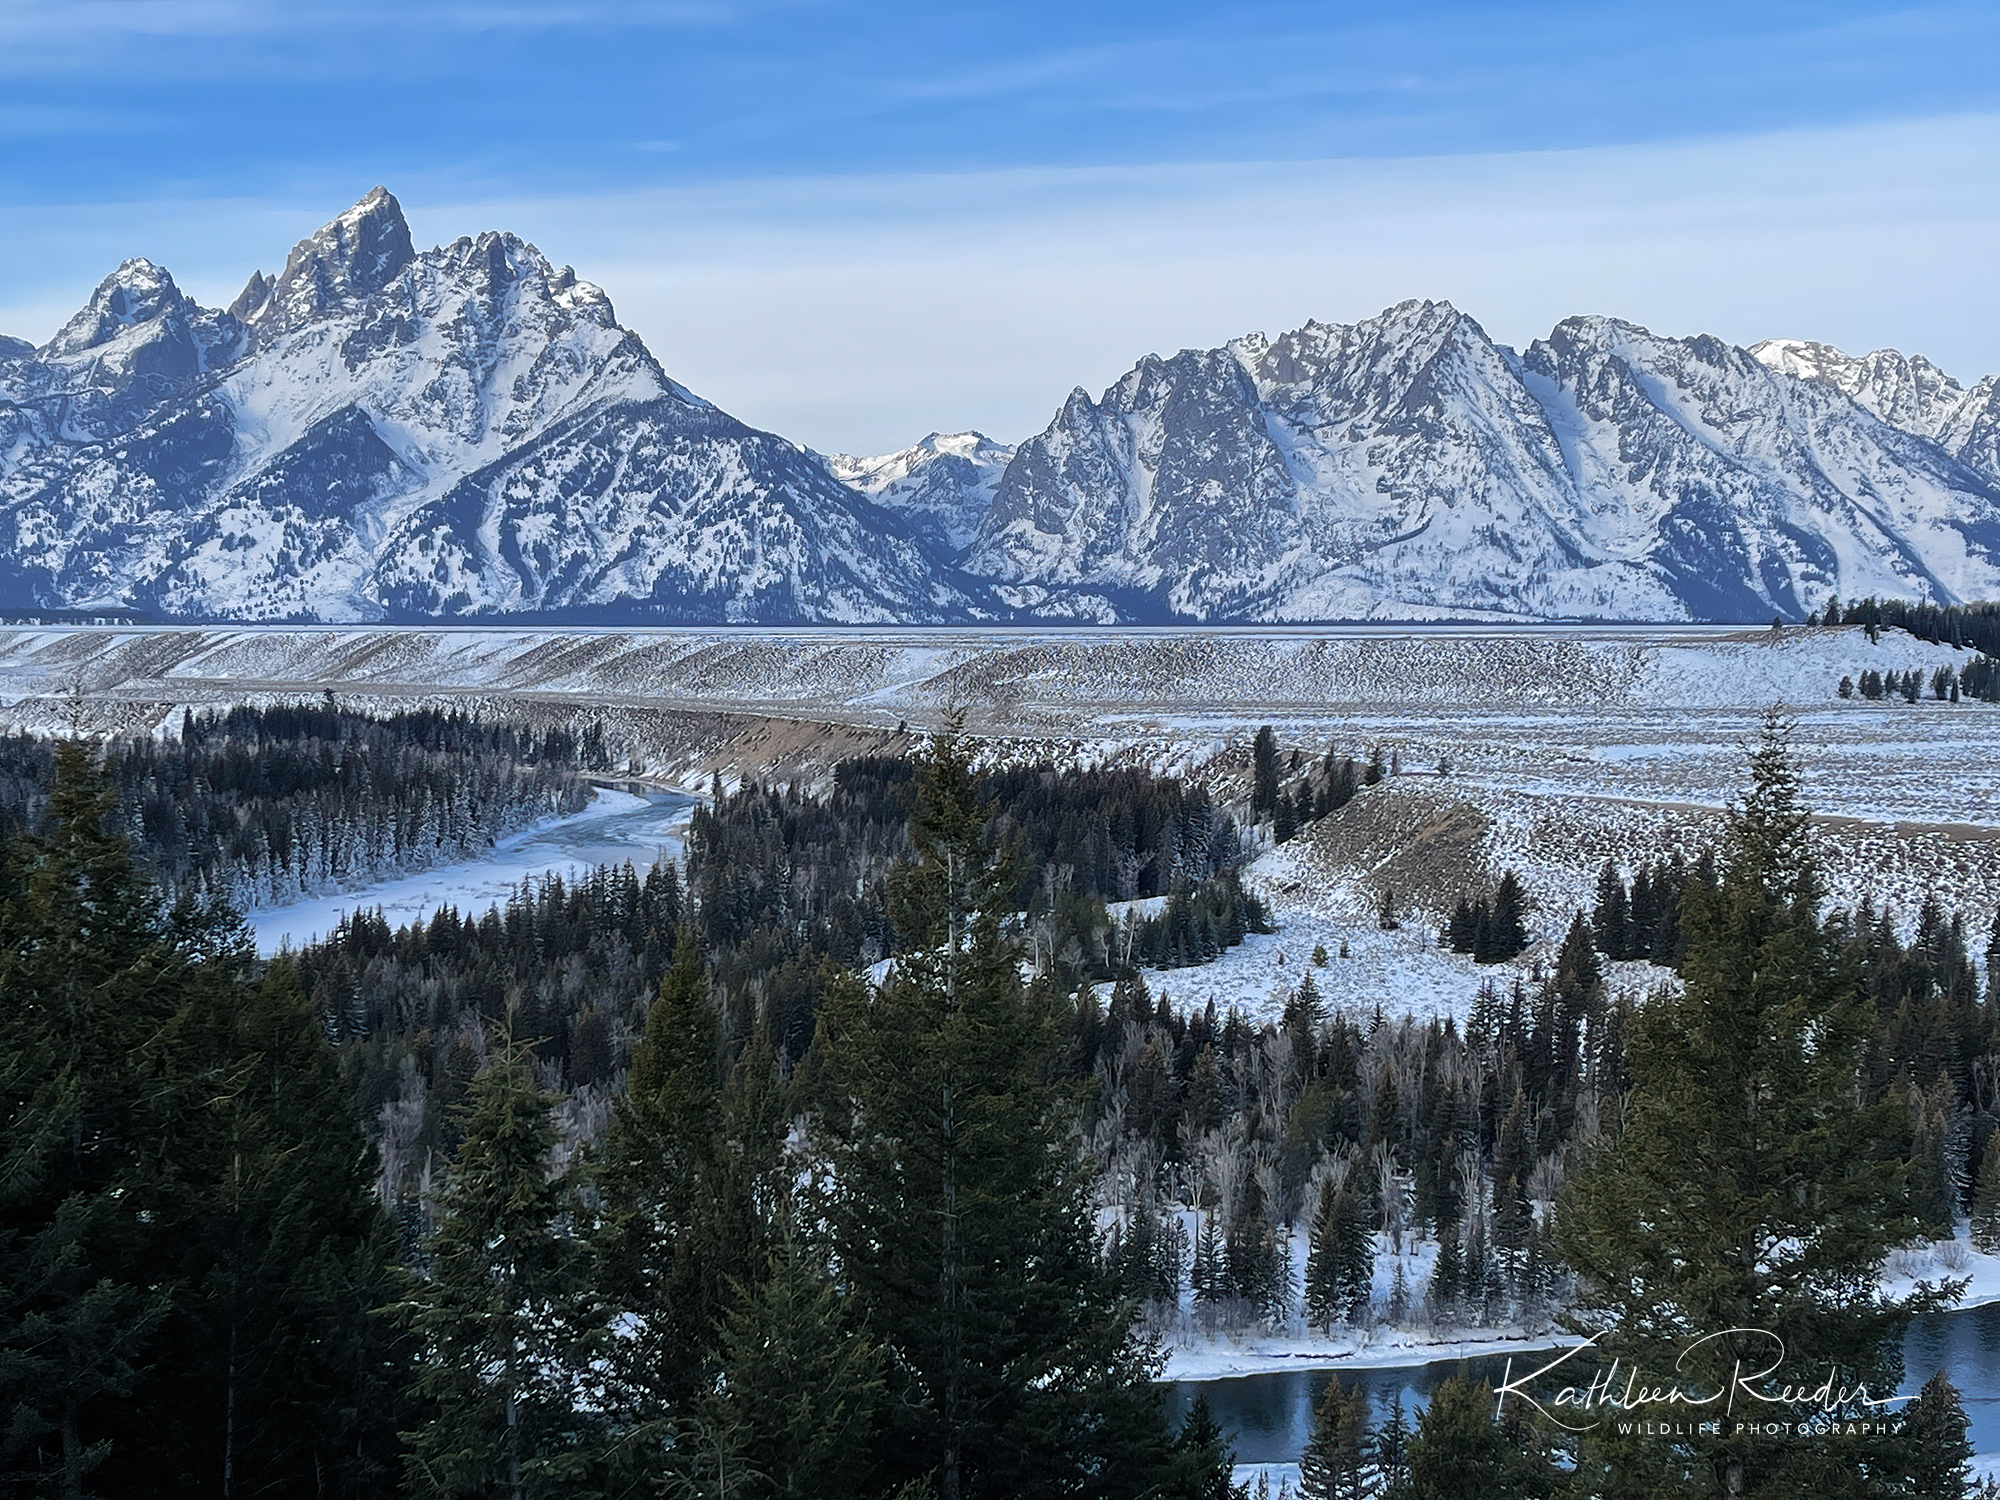 Winter Wildlife in Grand Teton National Park. Photography Workshop with Kathleen Reeder